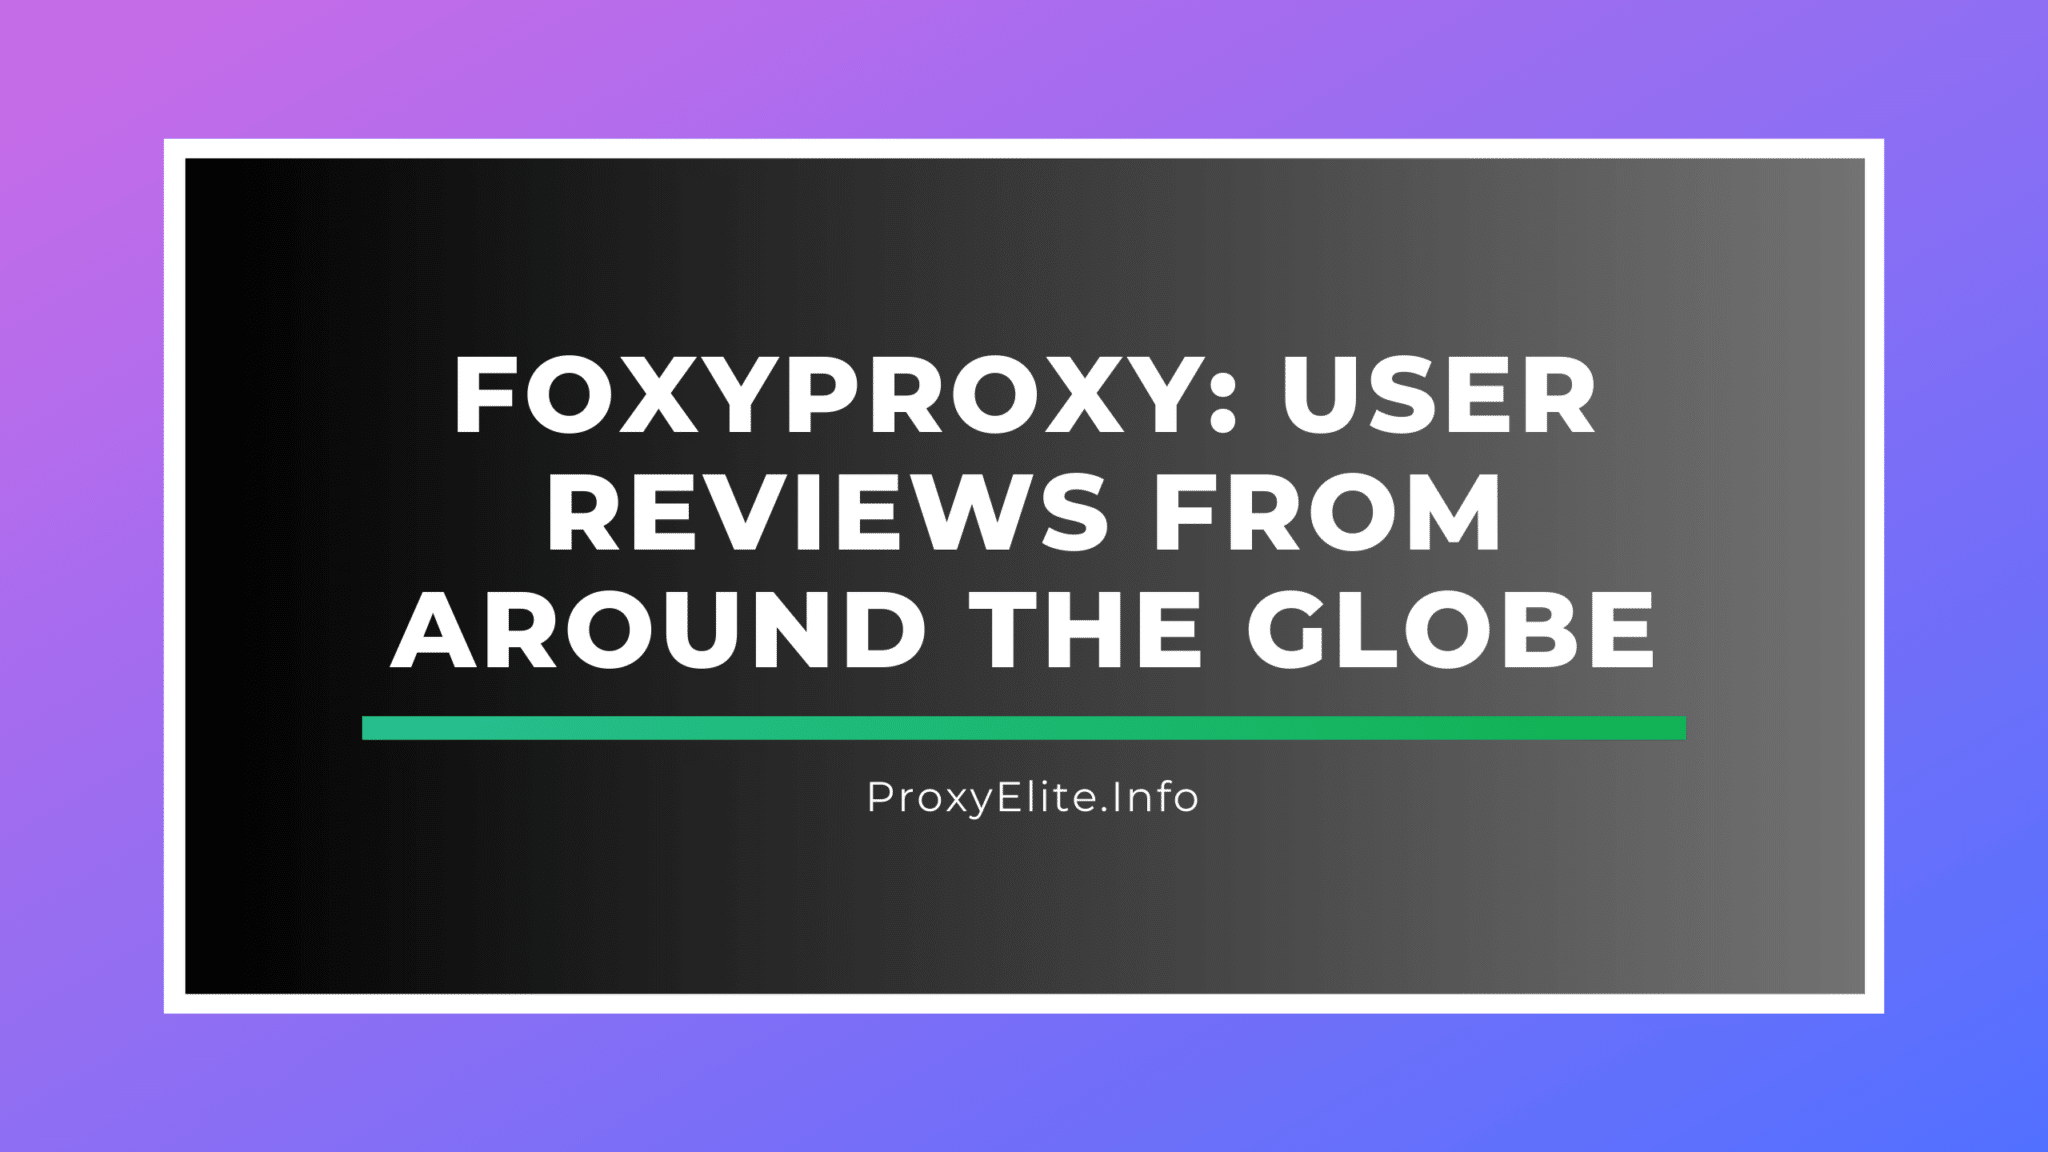 FoxyProxy: User Reviews from Around the Globe